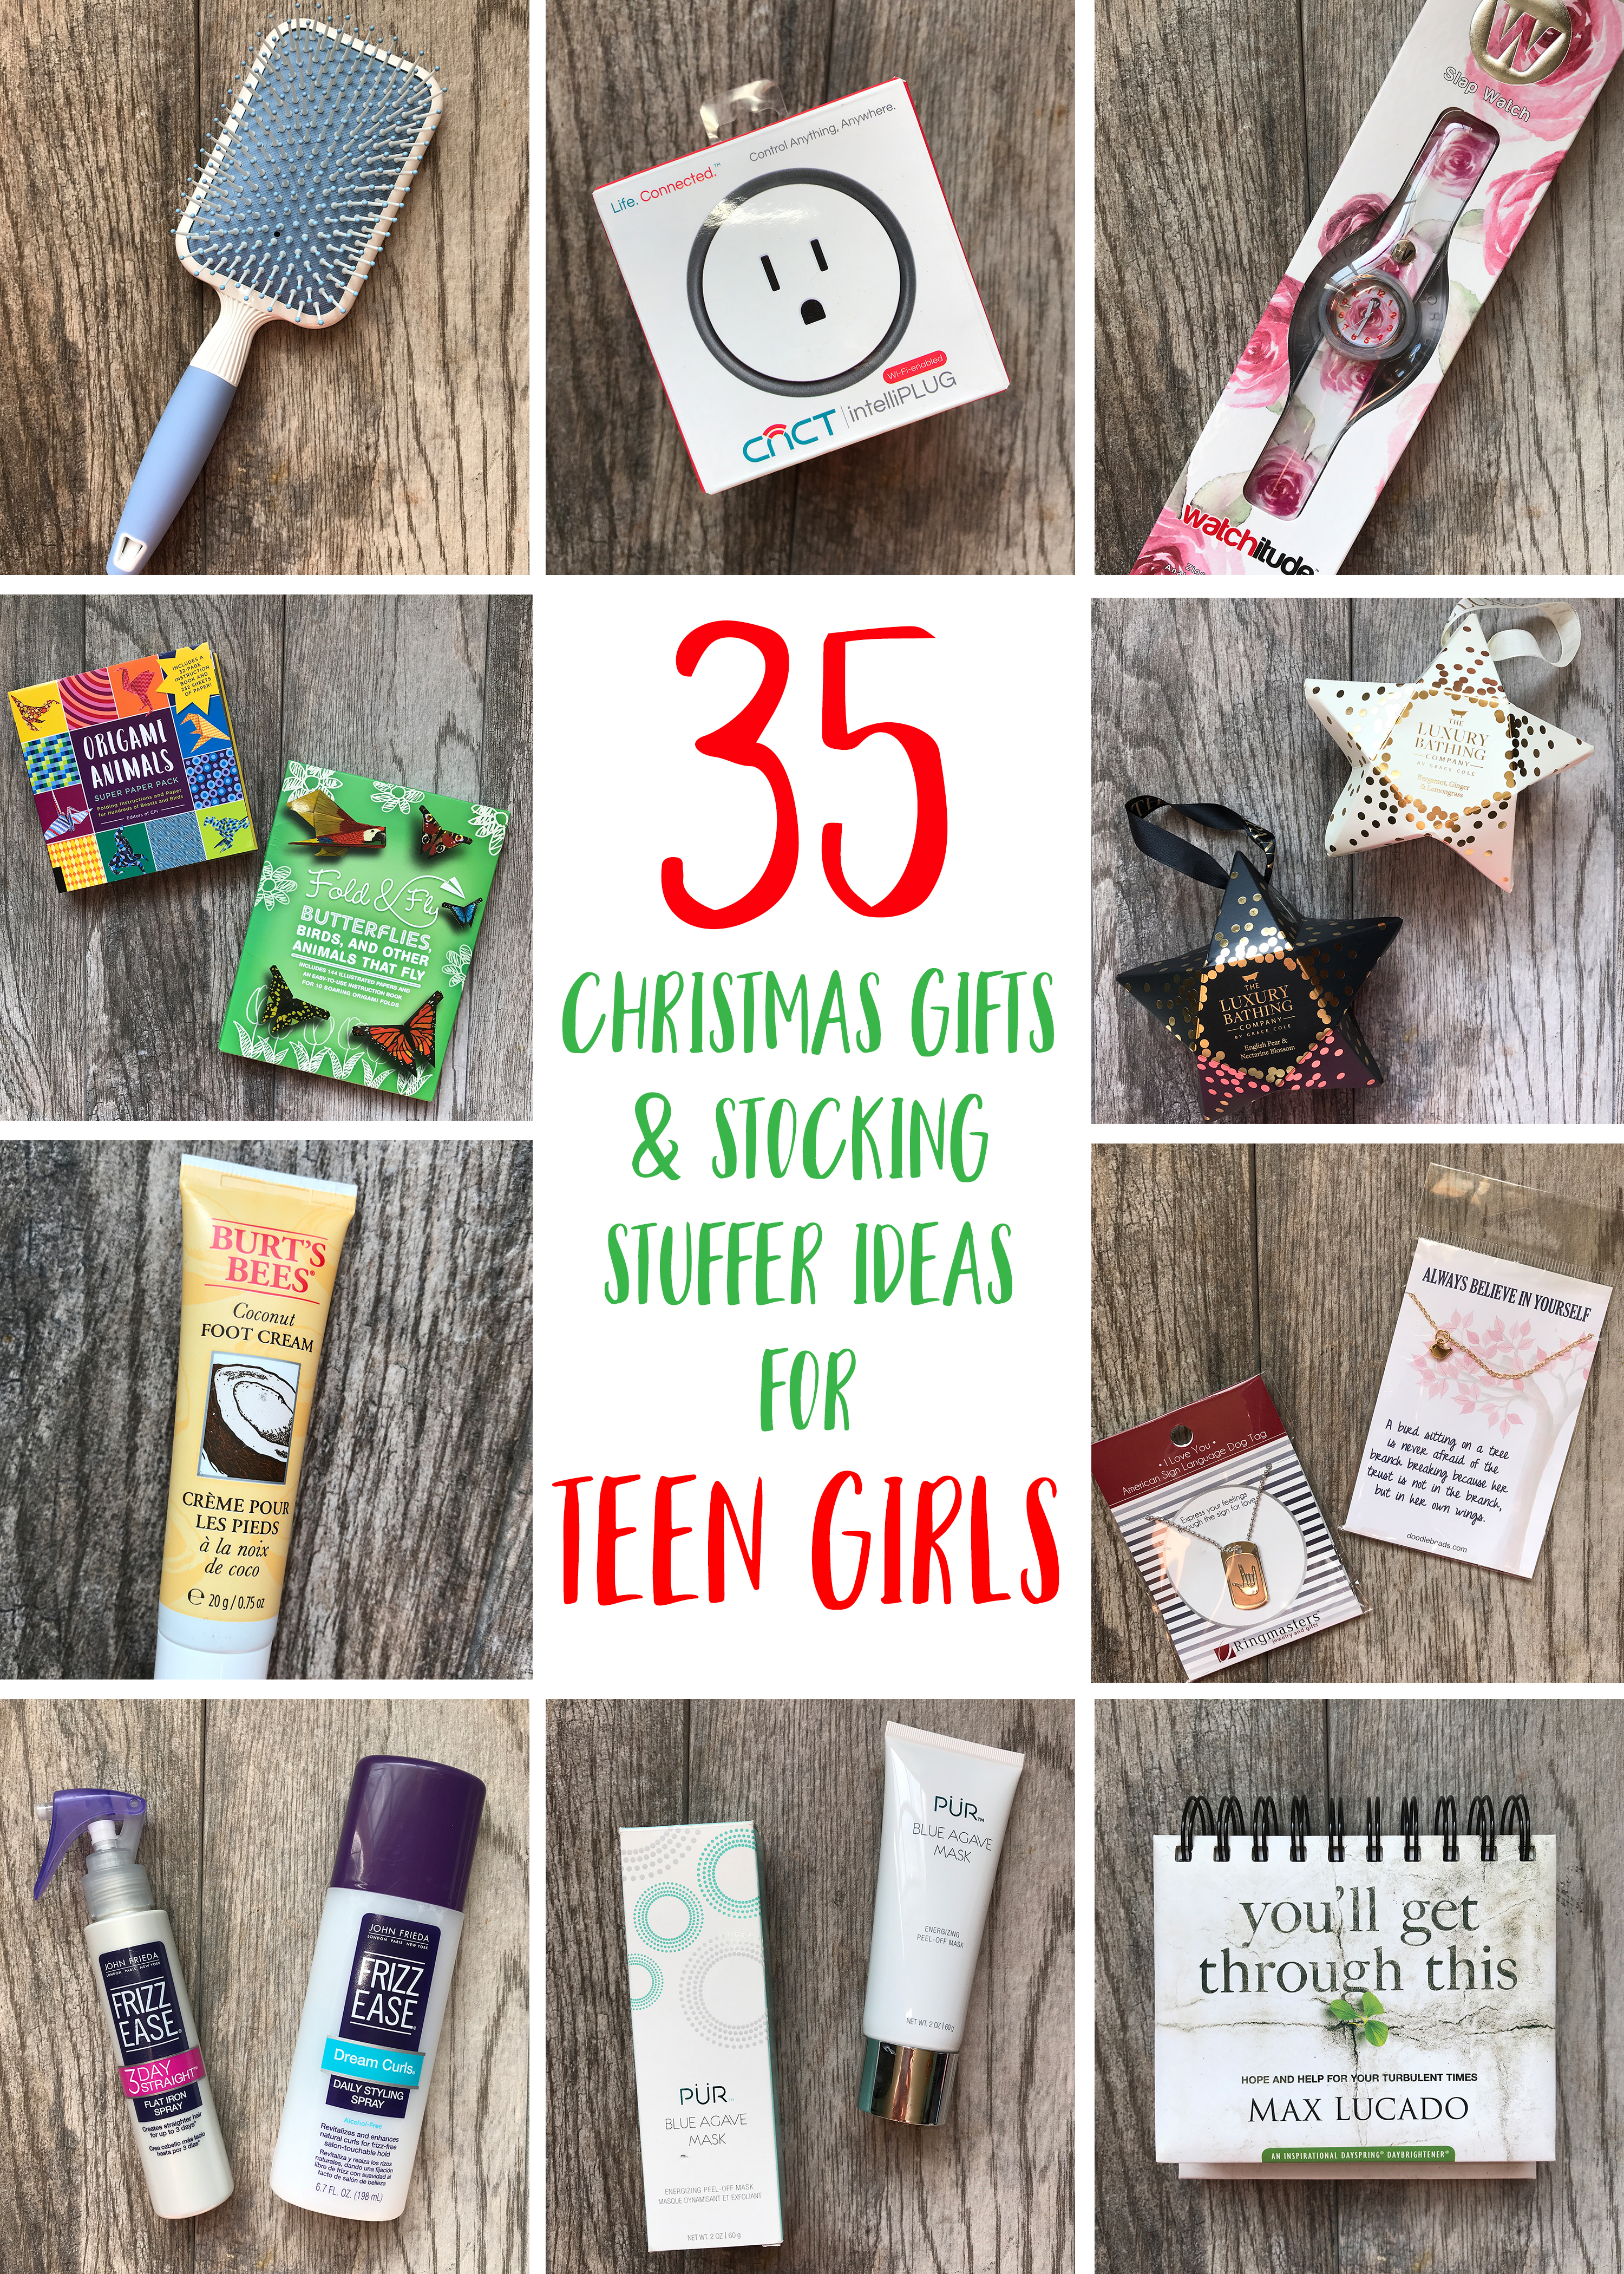 Christmas Gift Guide for Teenage Girls